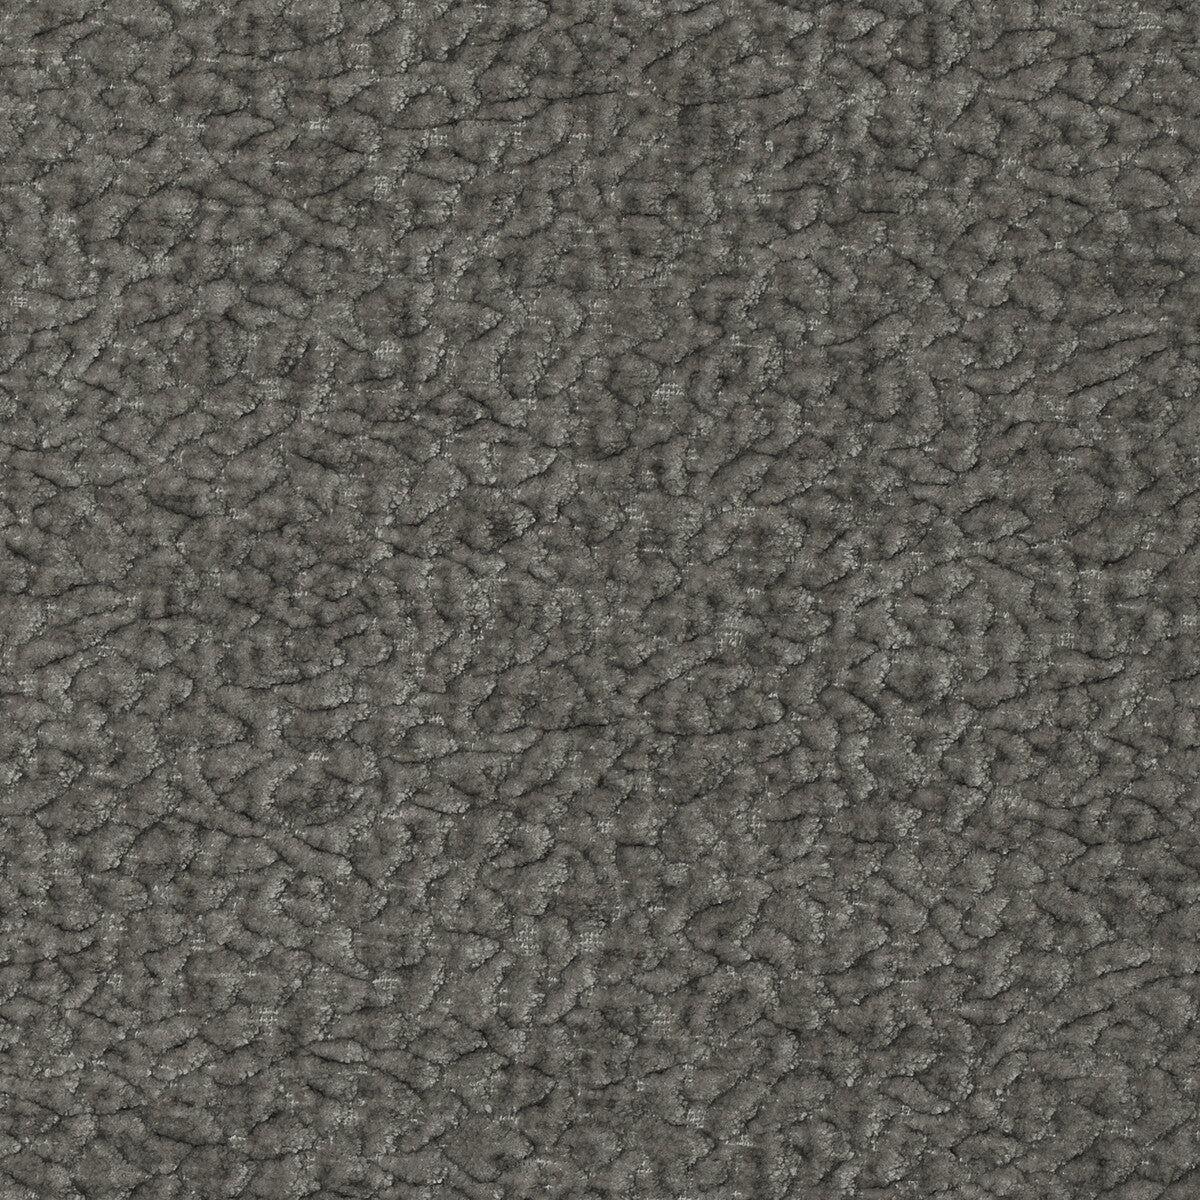 Barton Chenille fabric in vapor color - pattern 36074.106.0 - by Kravet Smart